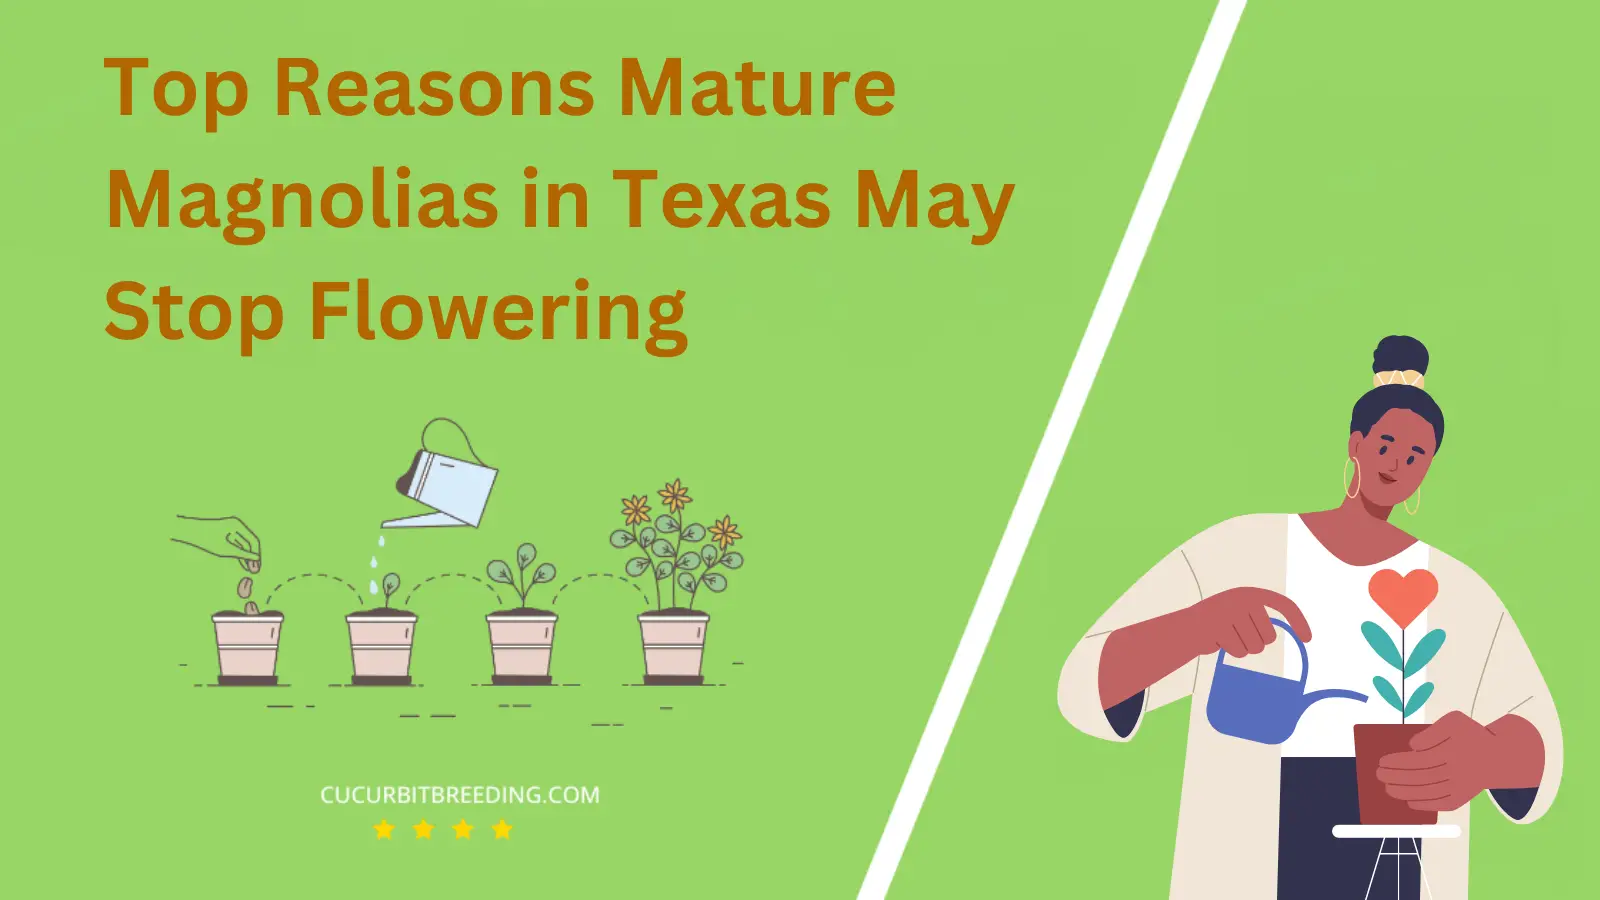 Top Reasons Mature Magnolias in Texas May Stop Flowering